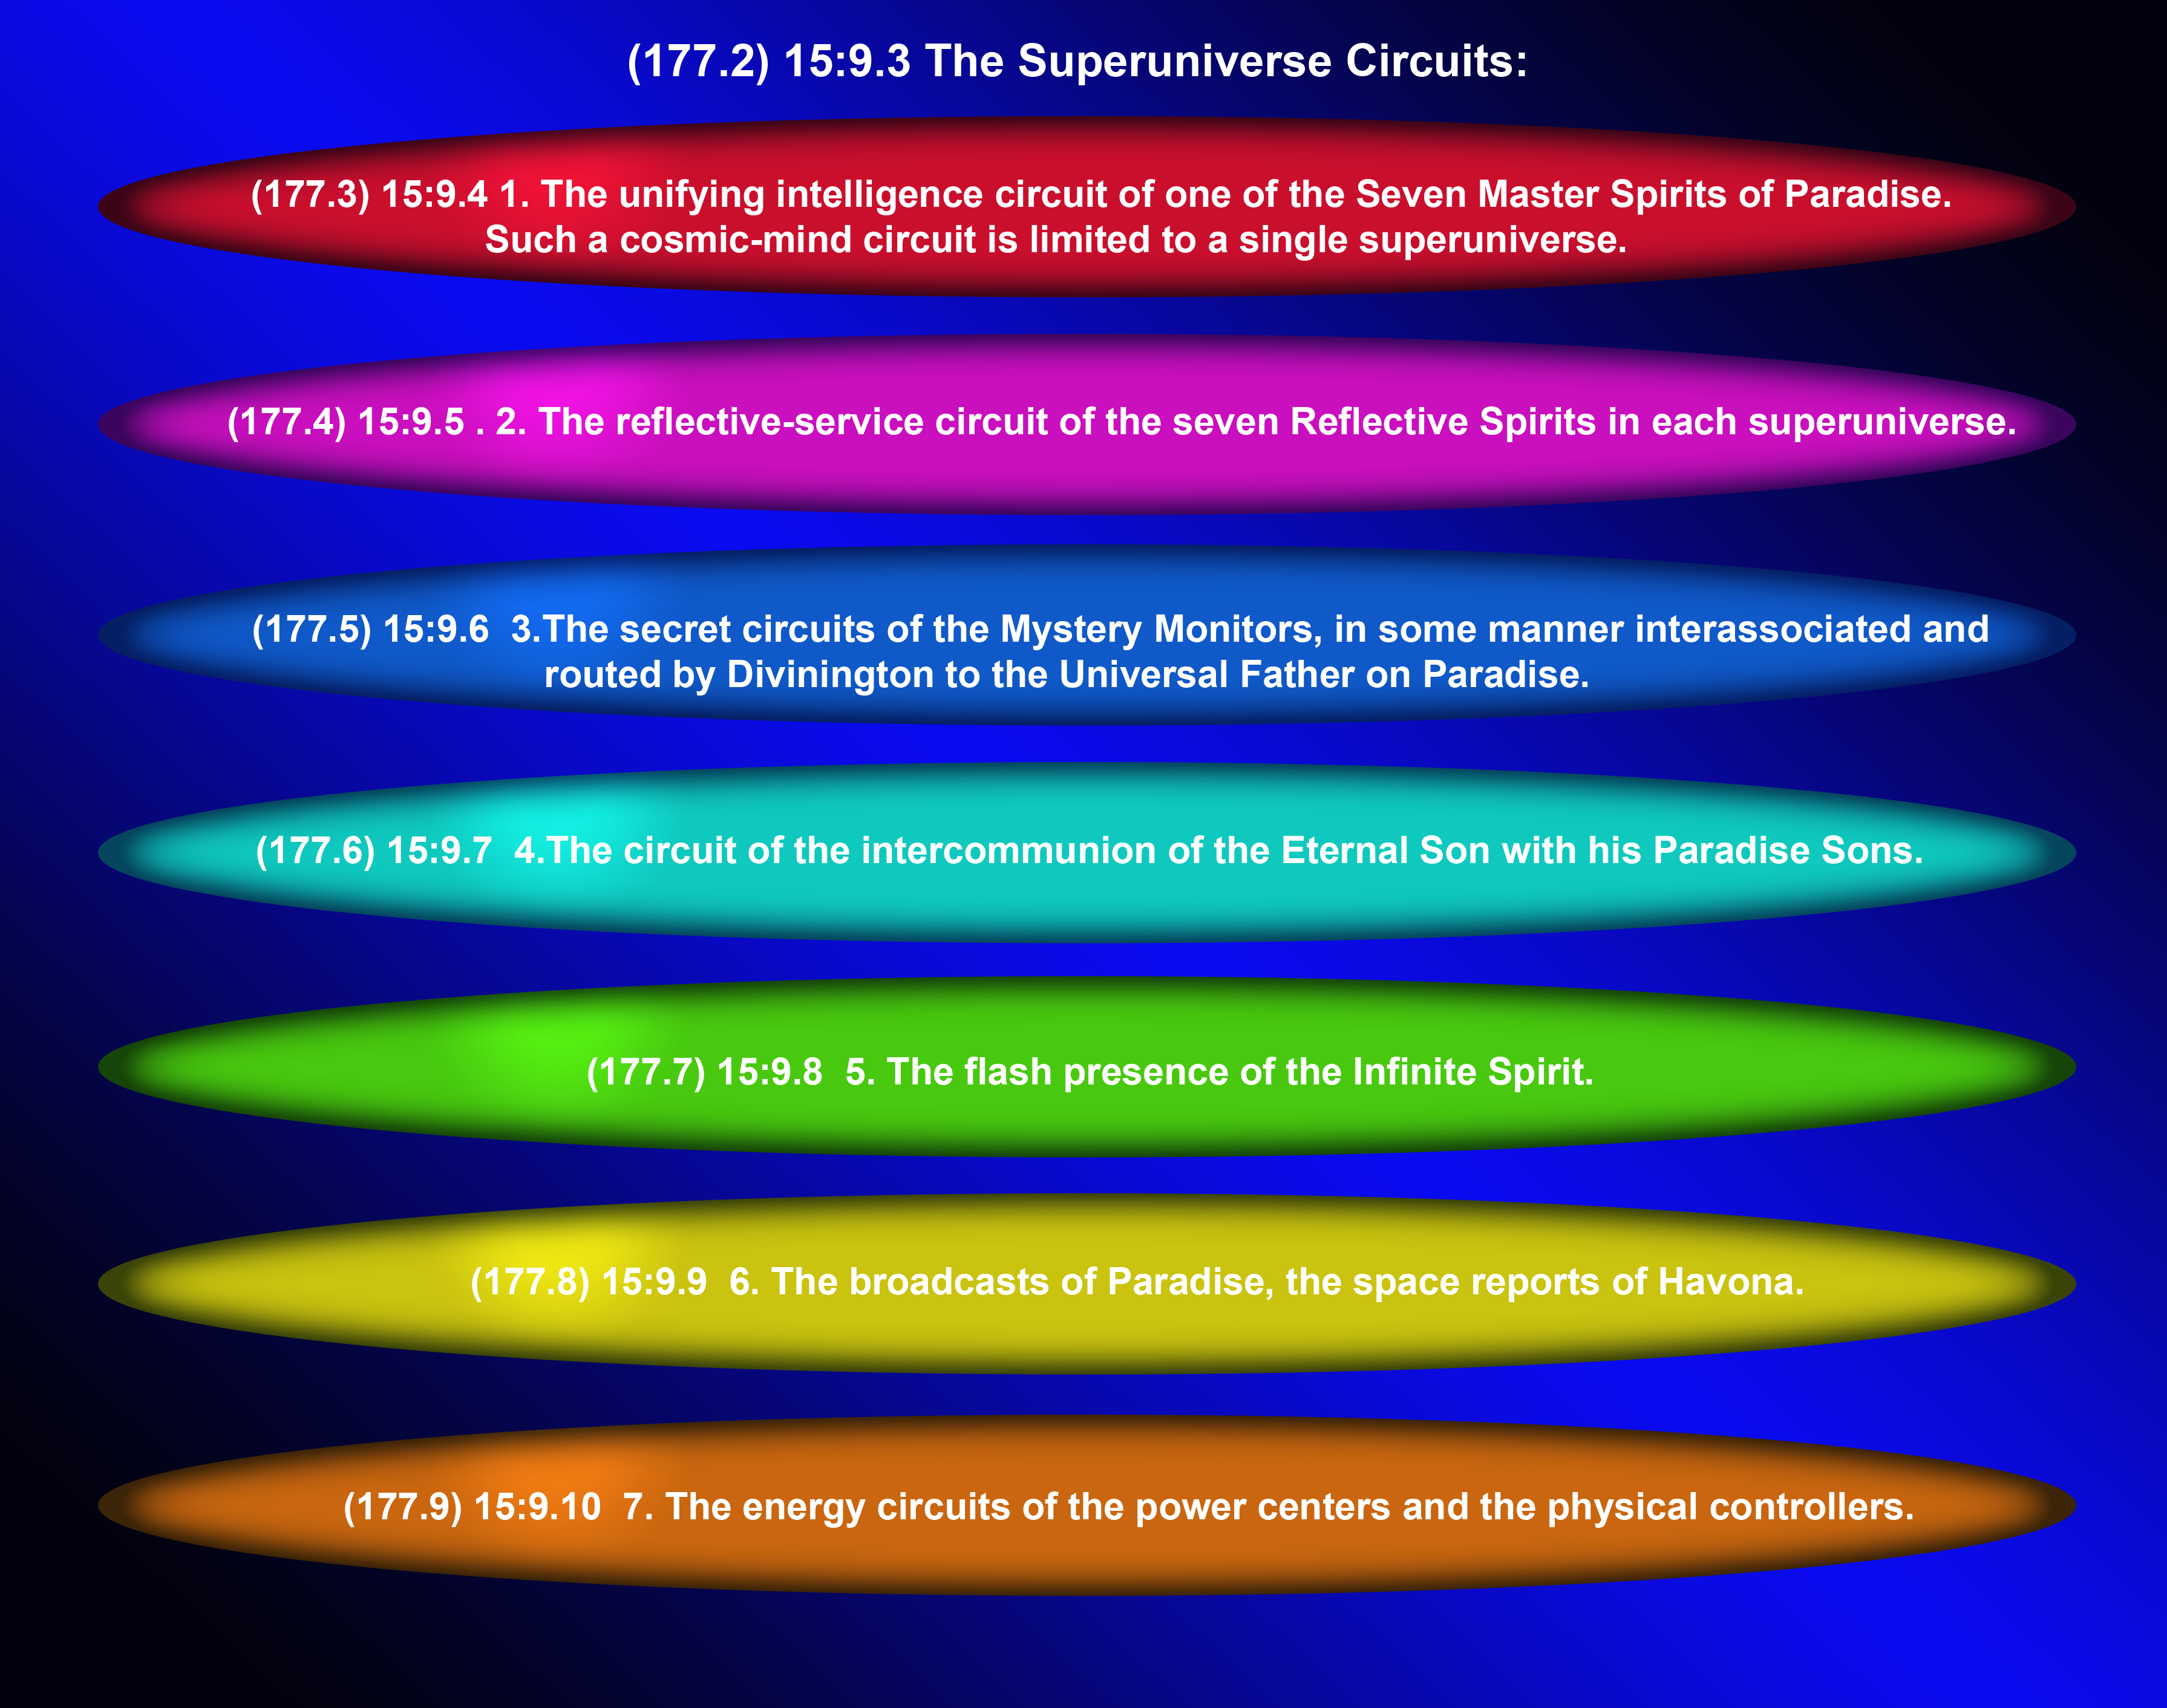 The Superuniverse circuits